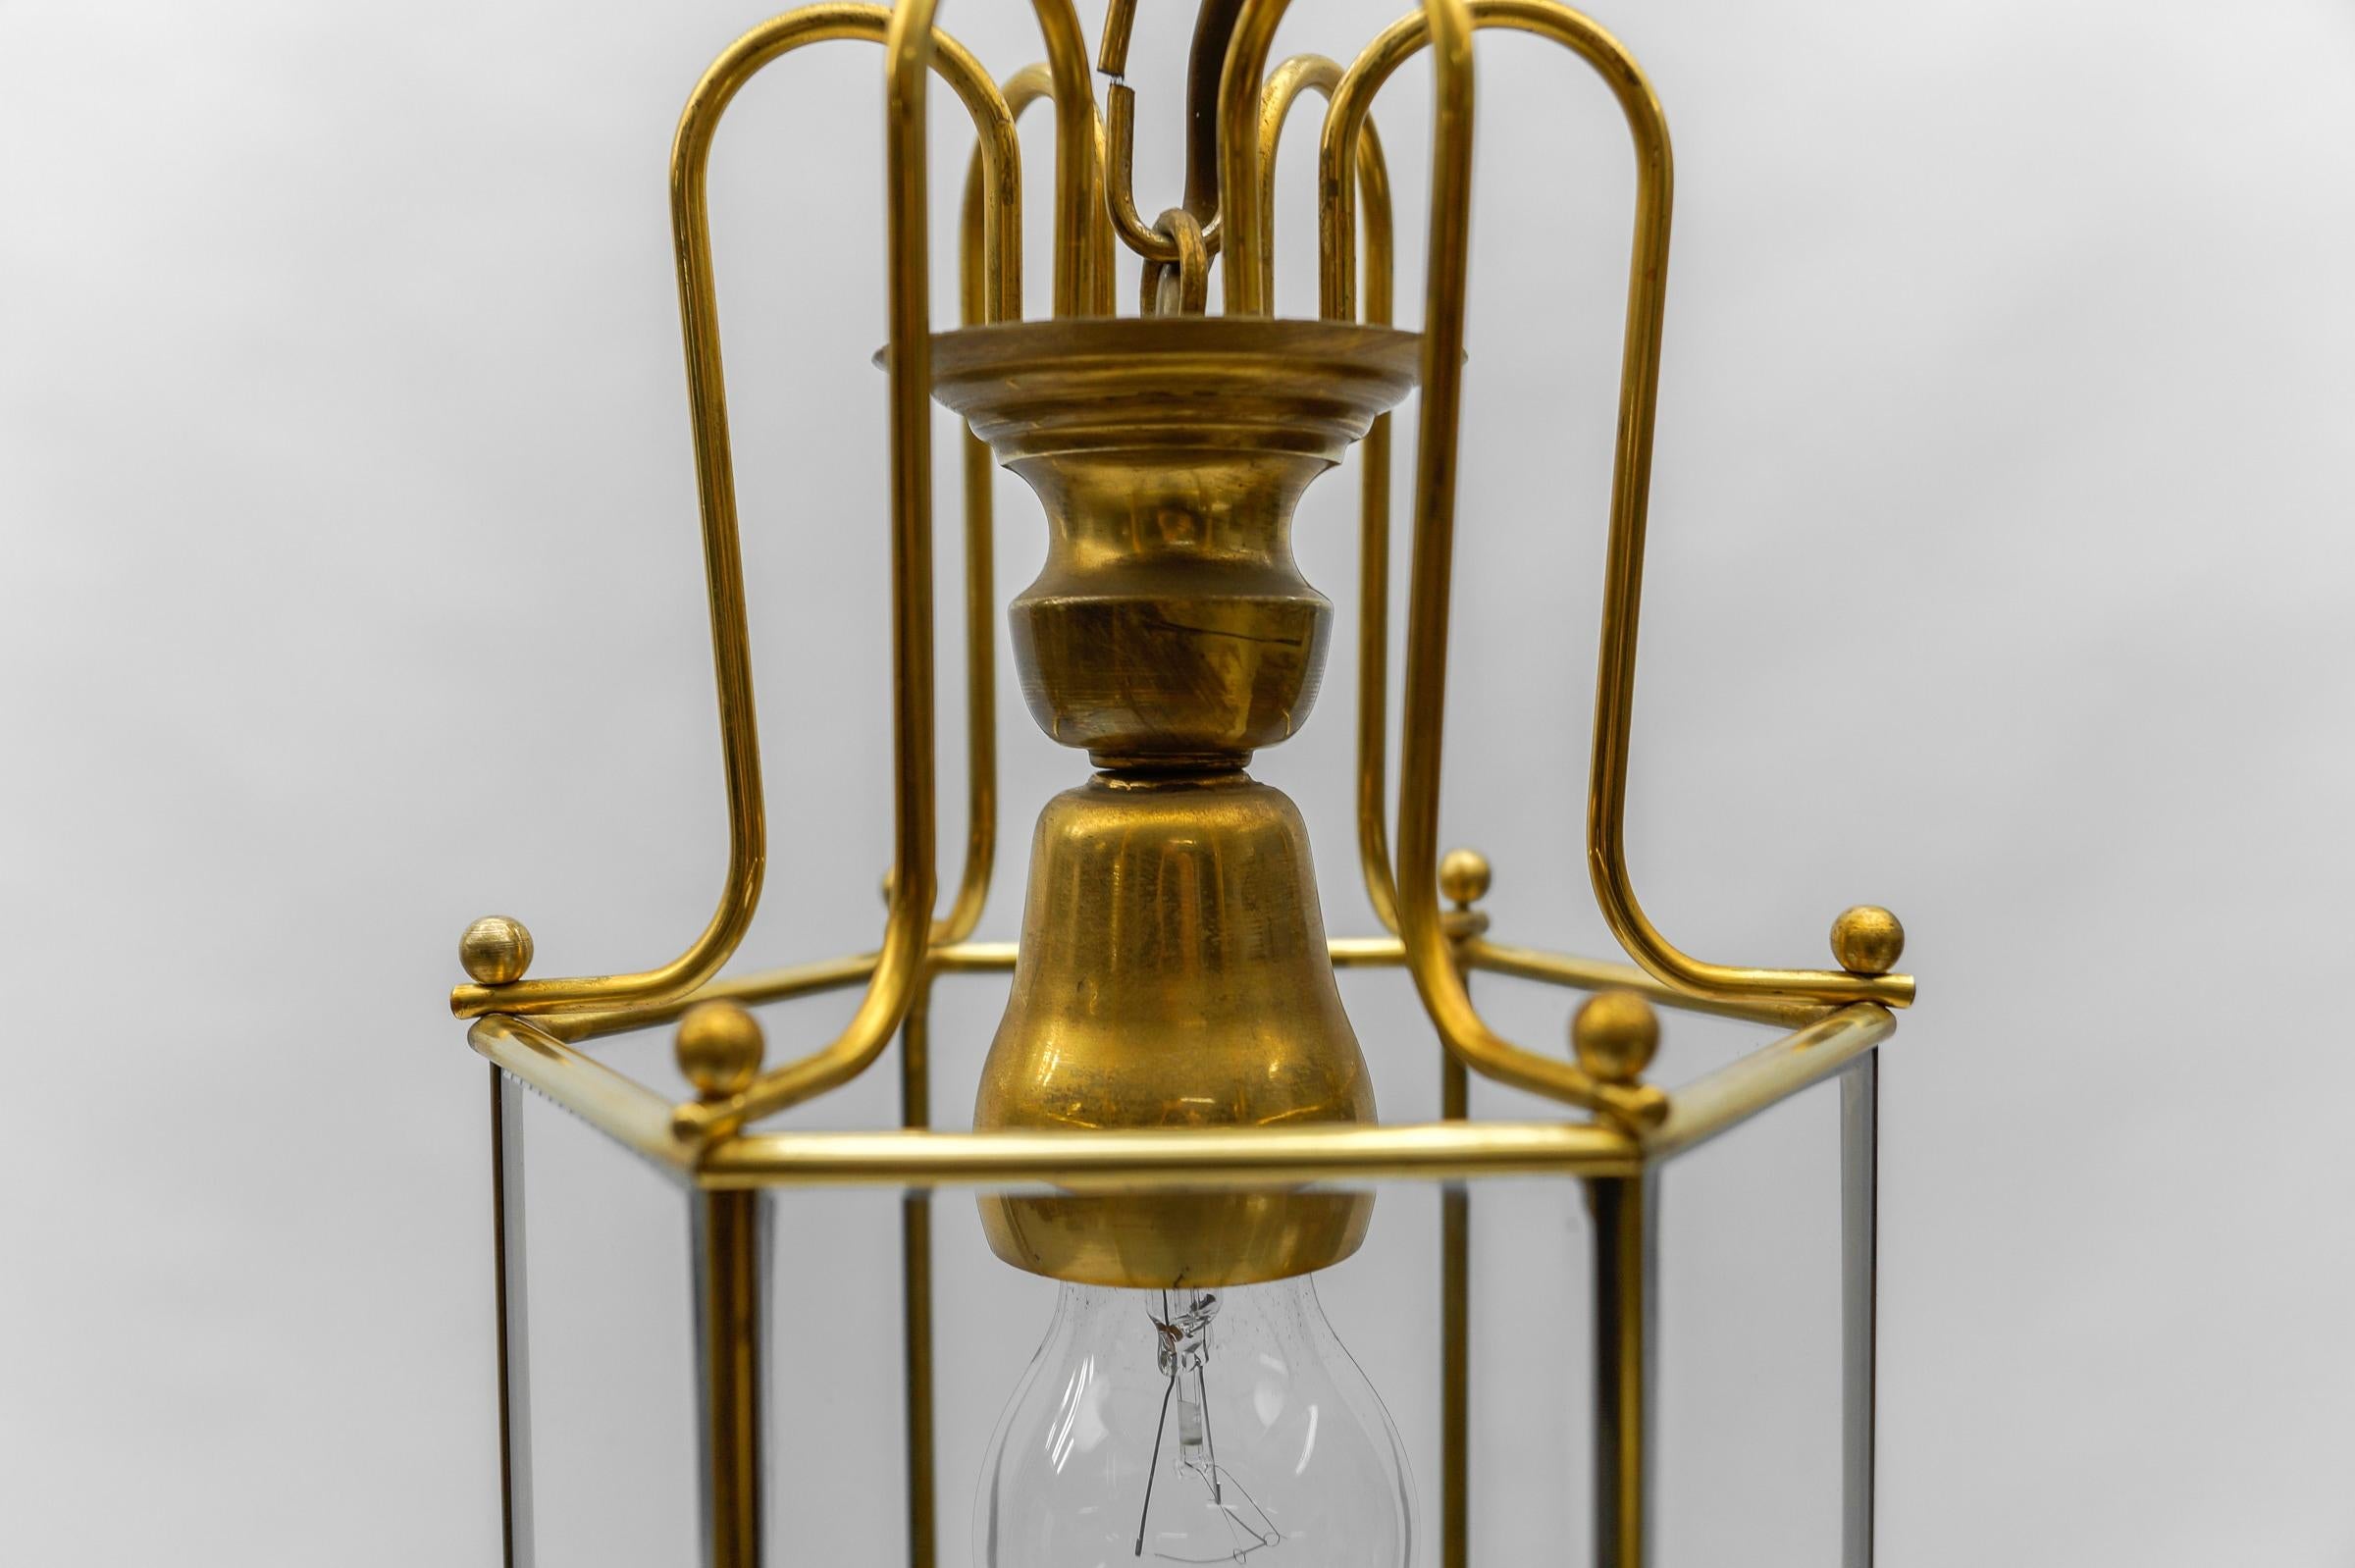 Art Deco Cut Glass Pendant Lamp in Brass, 1940s / 1950s For Sale 2